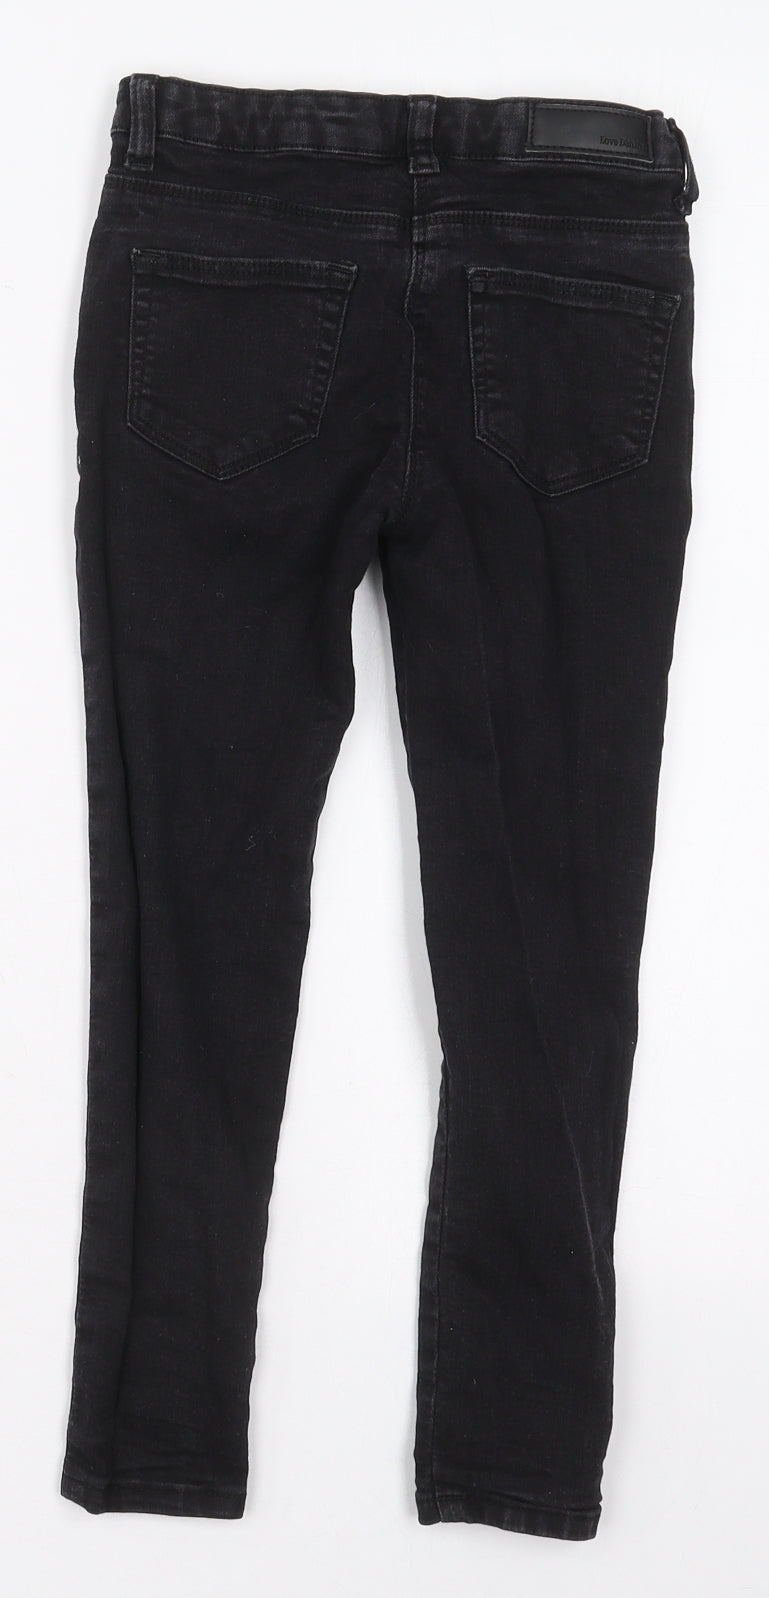 Matalan Girls Black  Cotton Skinny Jeans Size 7 Years  Regular Button